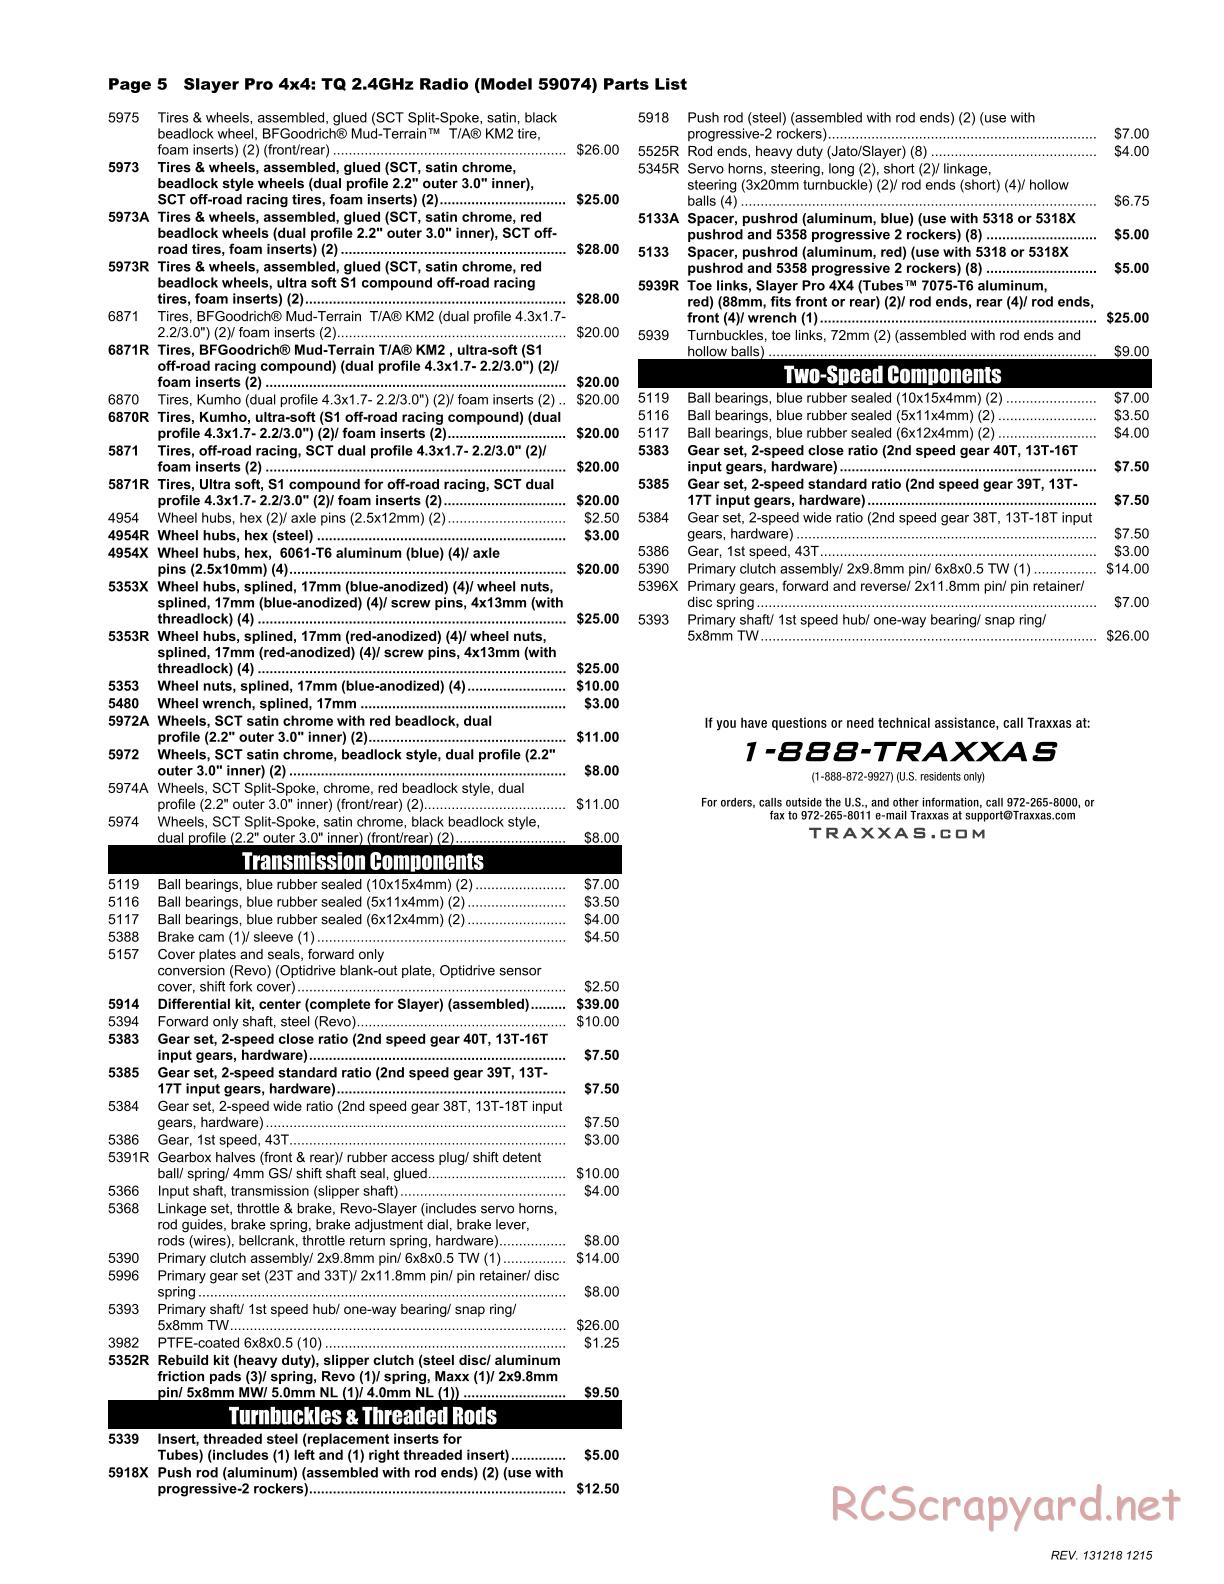 Traxxas - Slayer Pro 4x4 (2012) - Parts List - Page 5